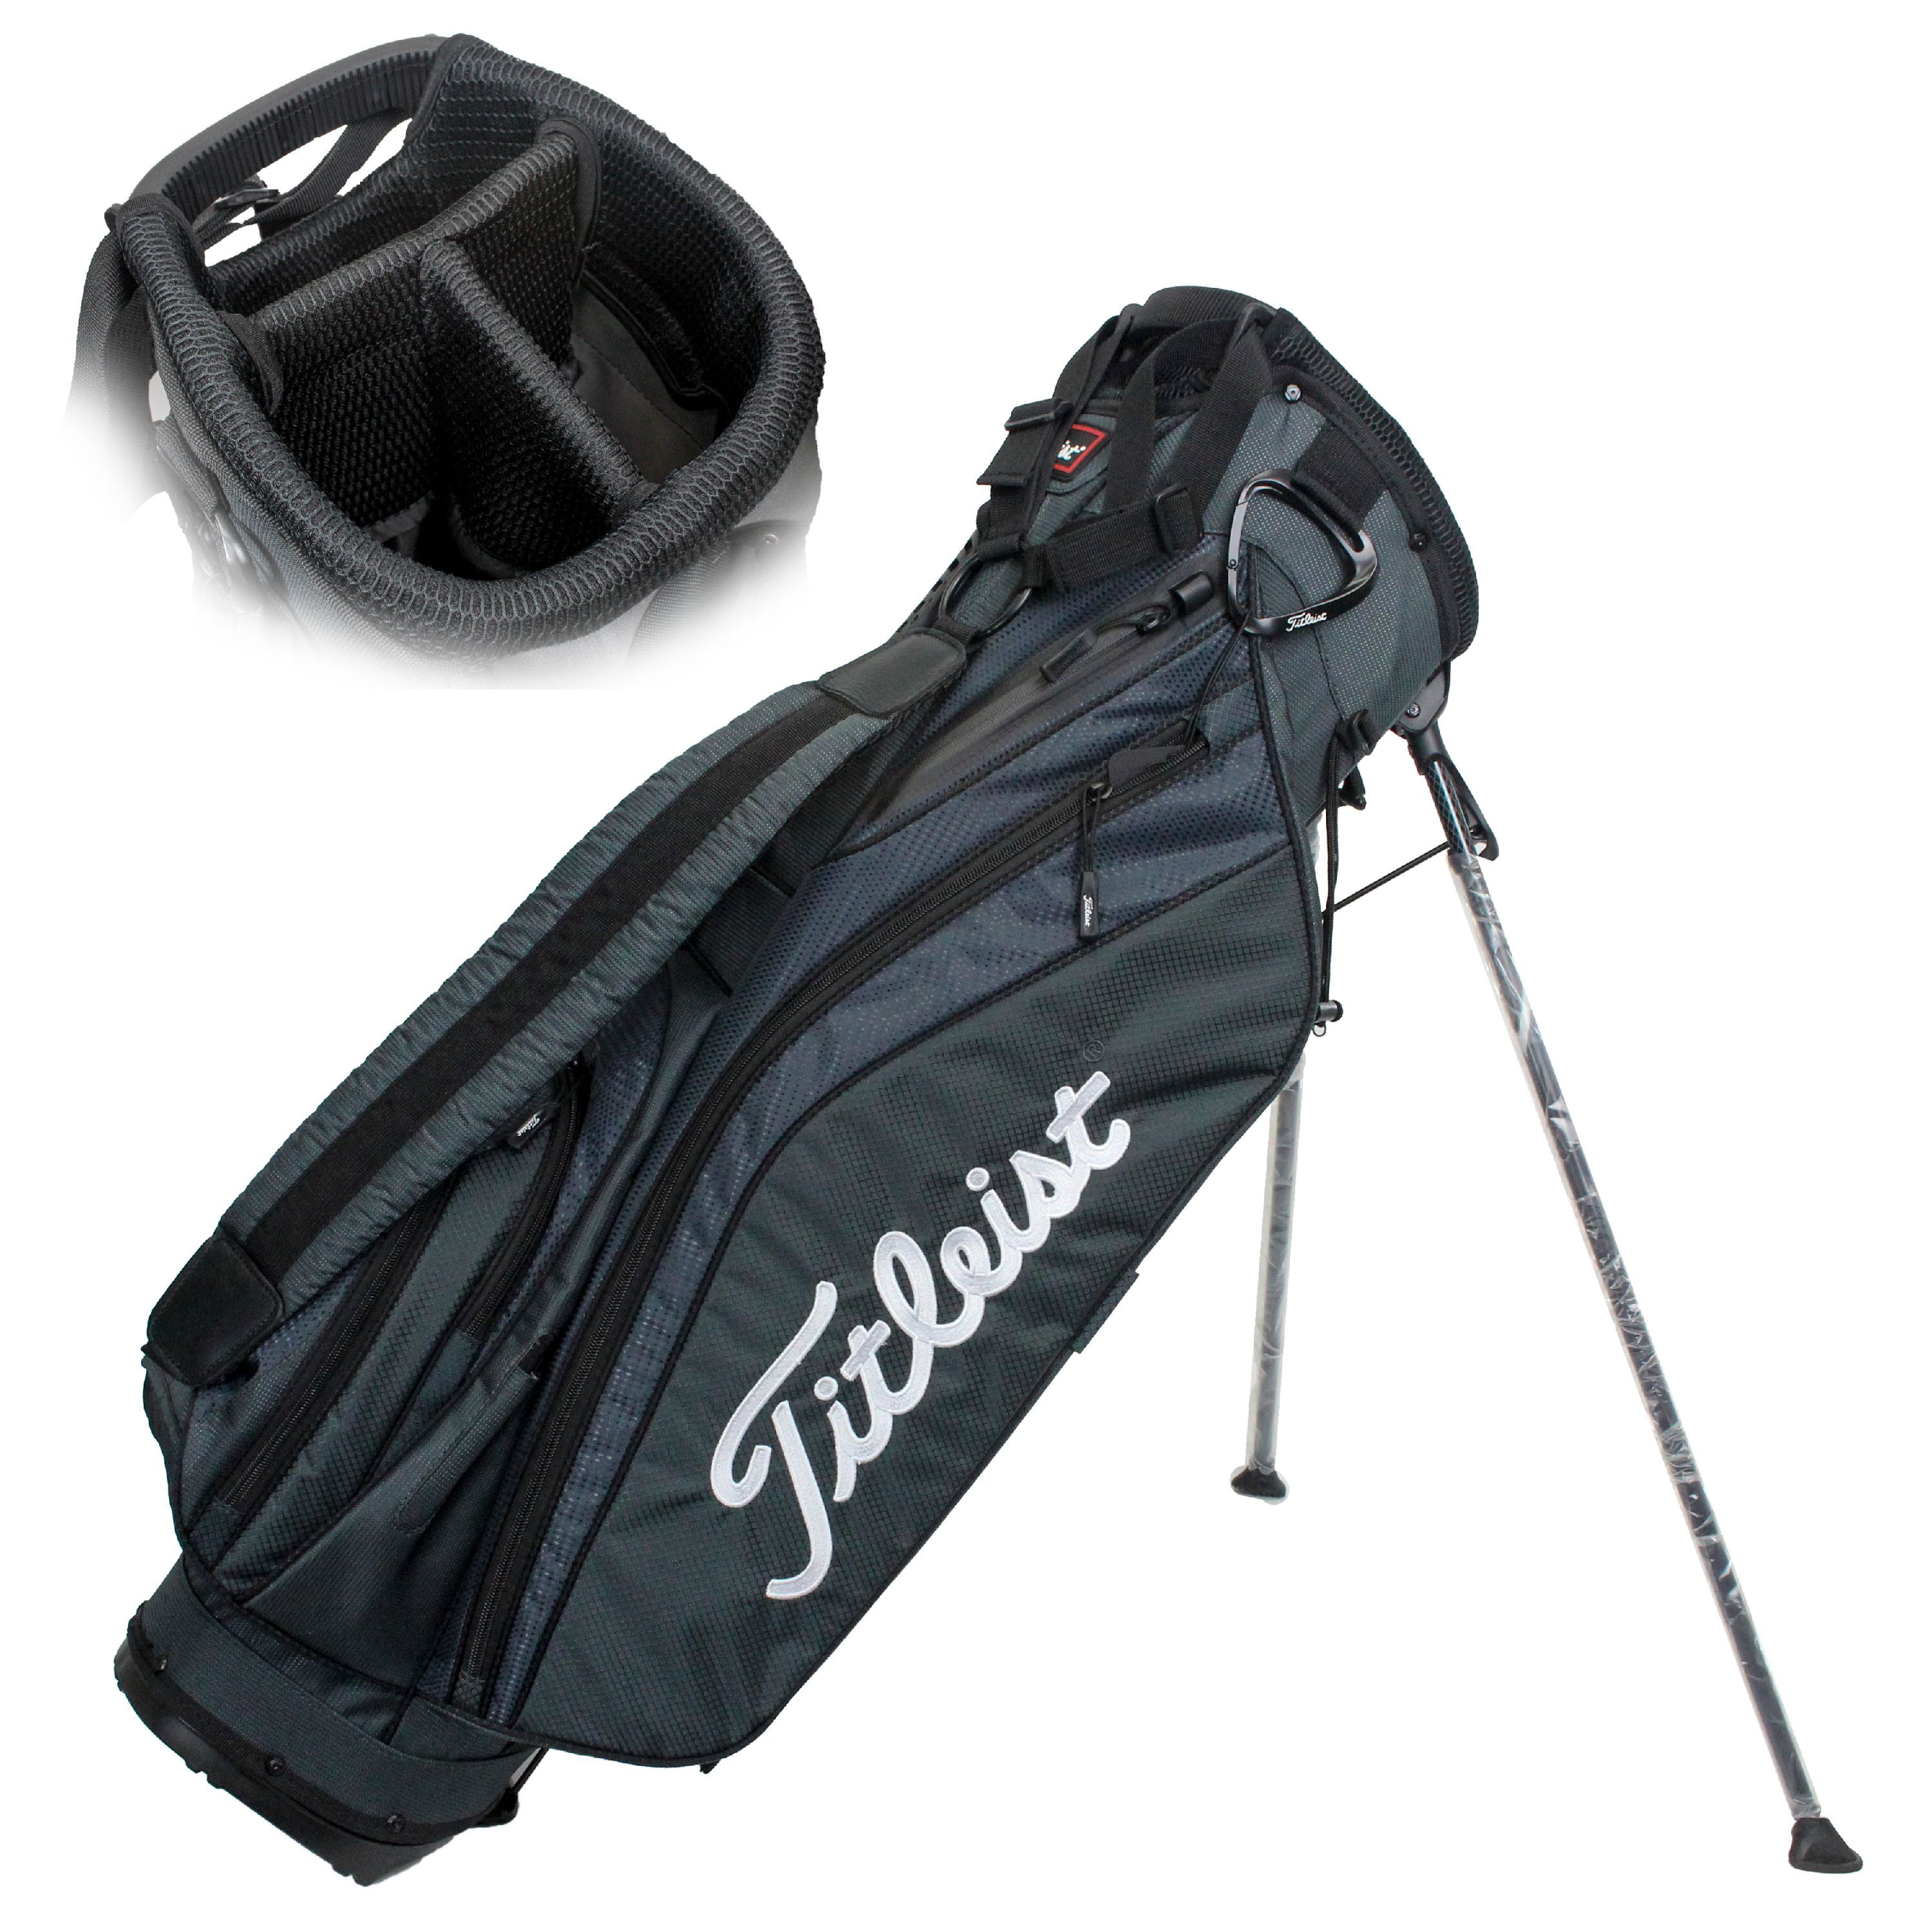 Titleist Golf Bag Accessories